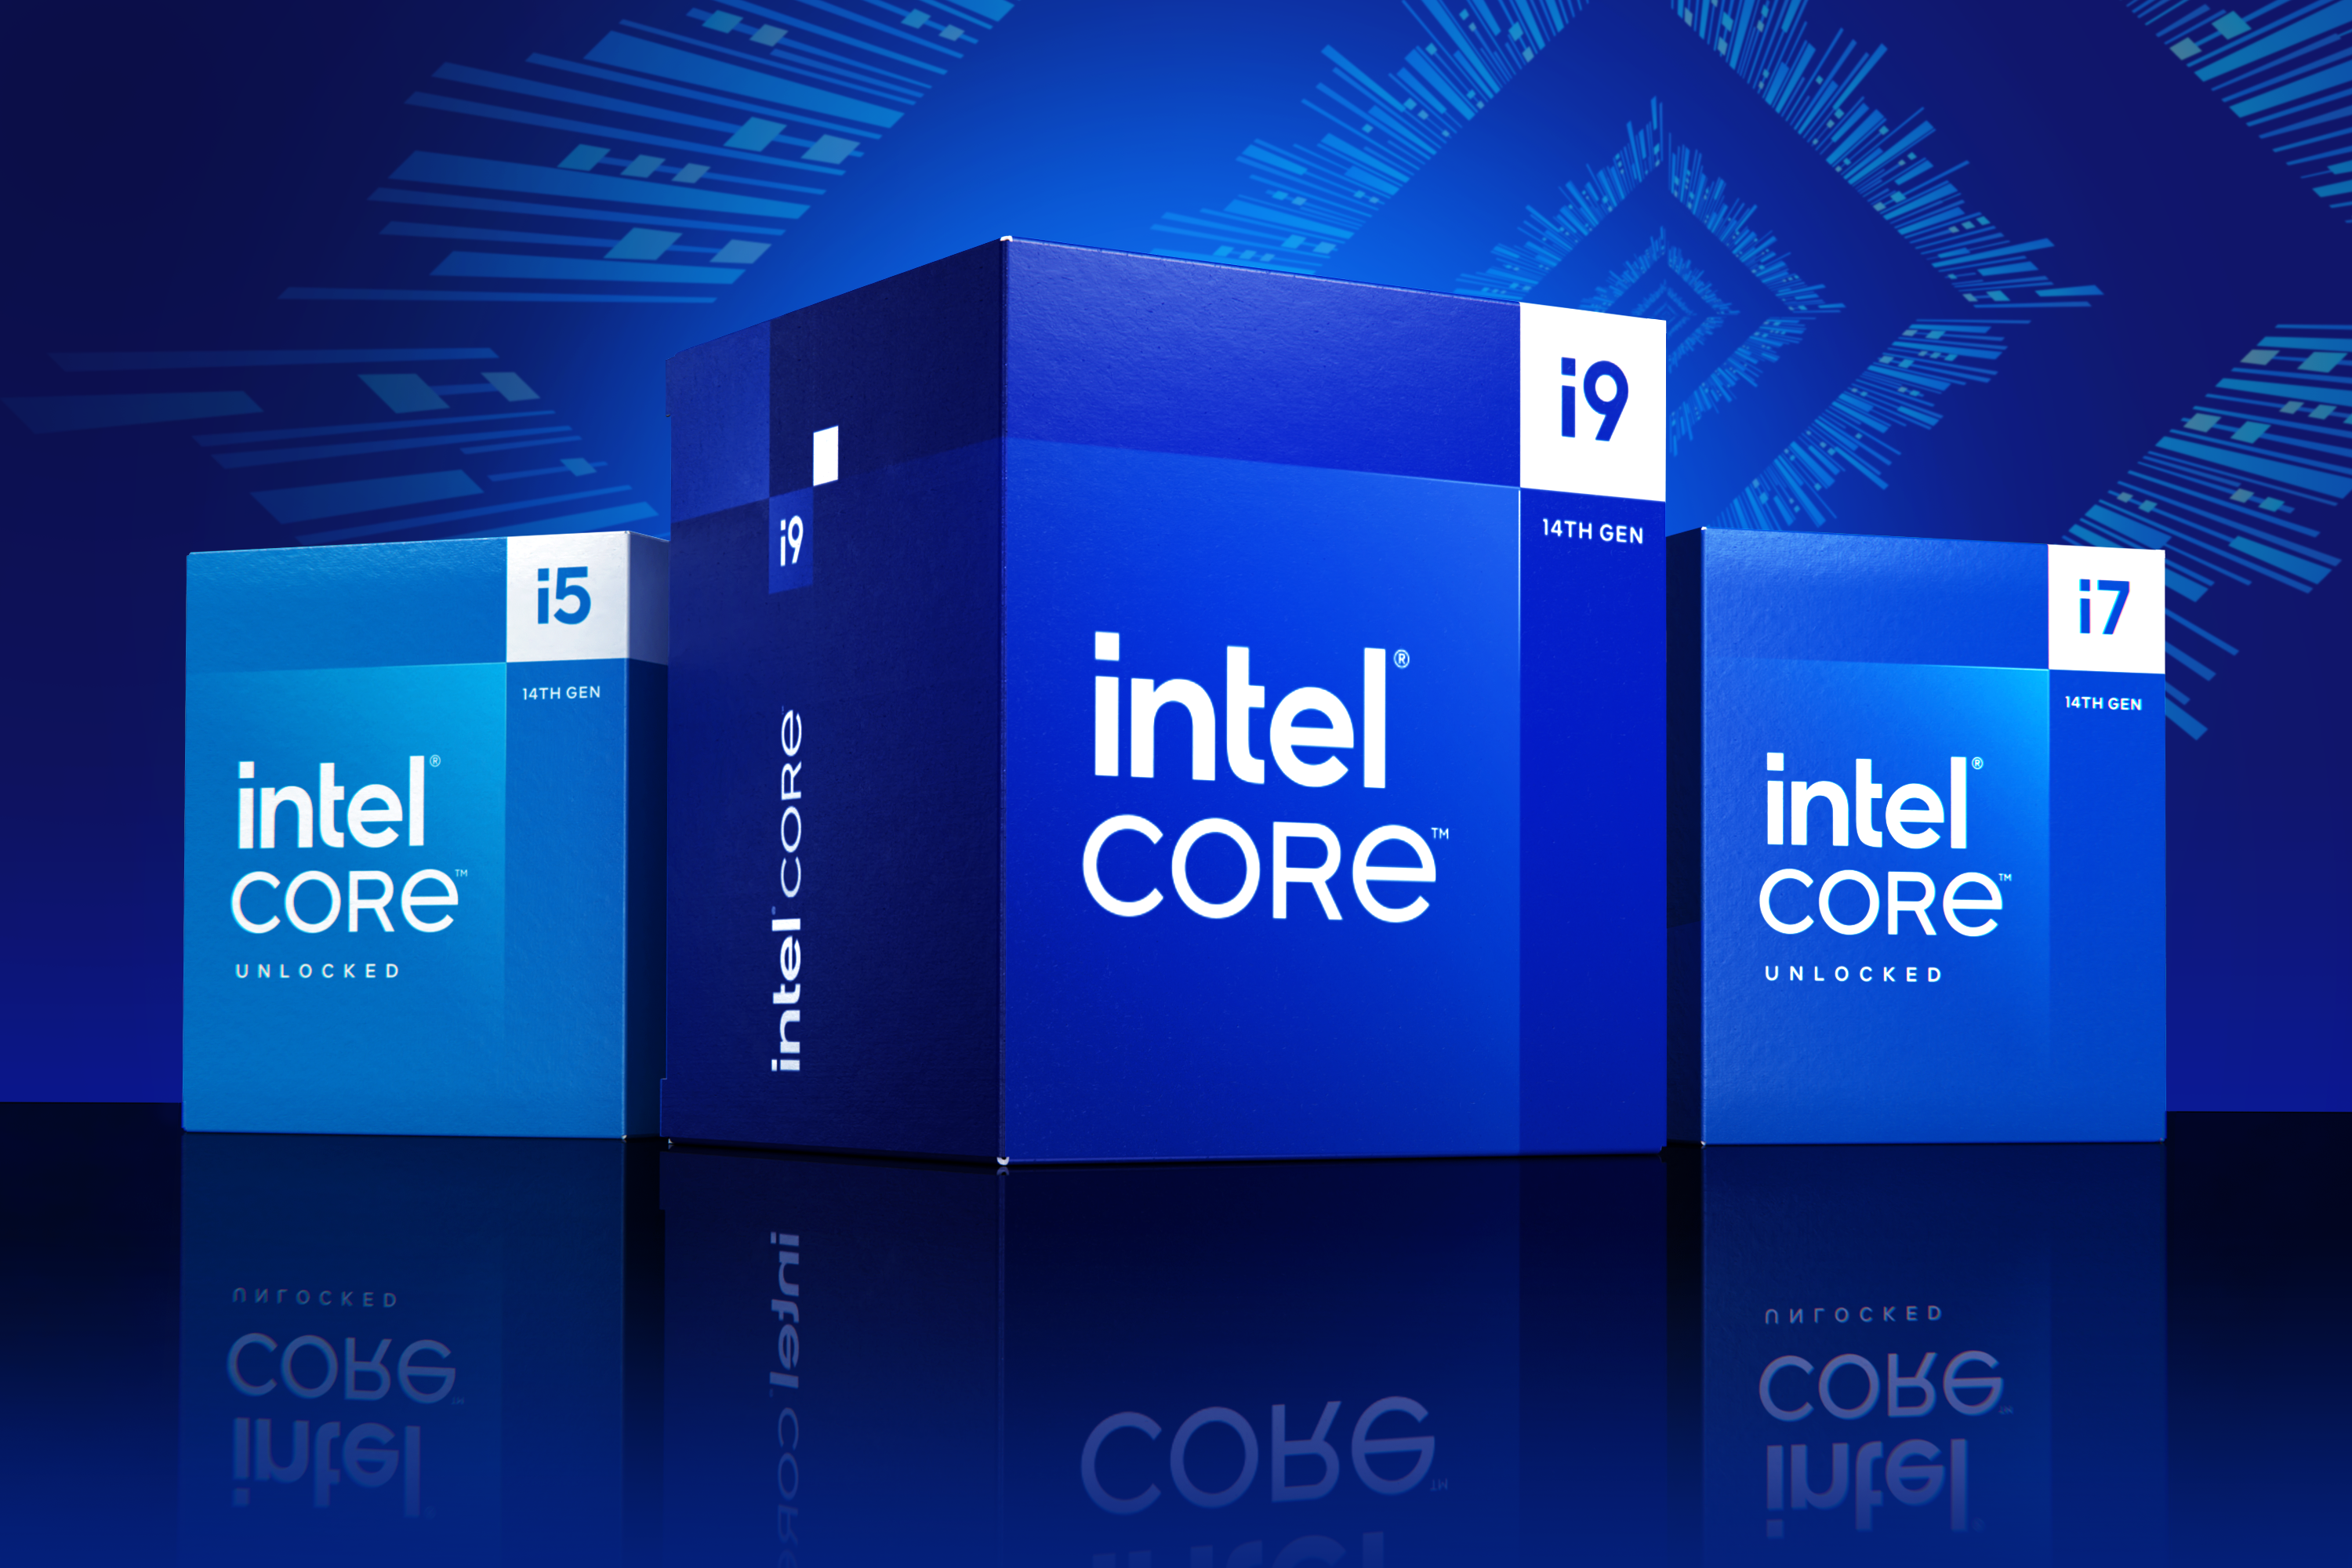 Intel i9, i5, i7 14th Gen CPUs